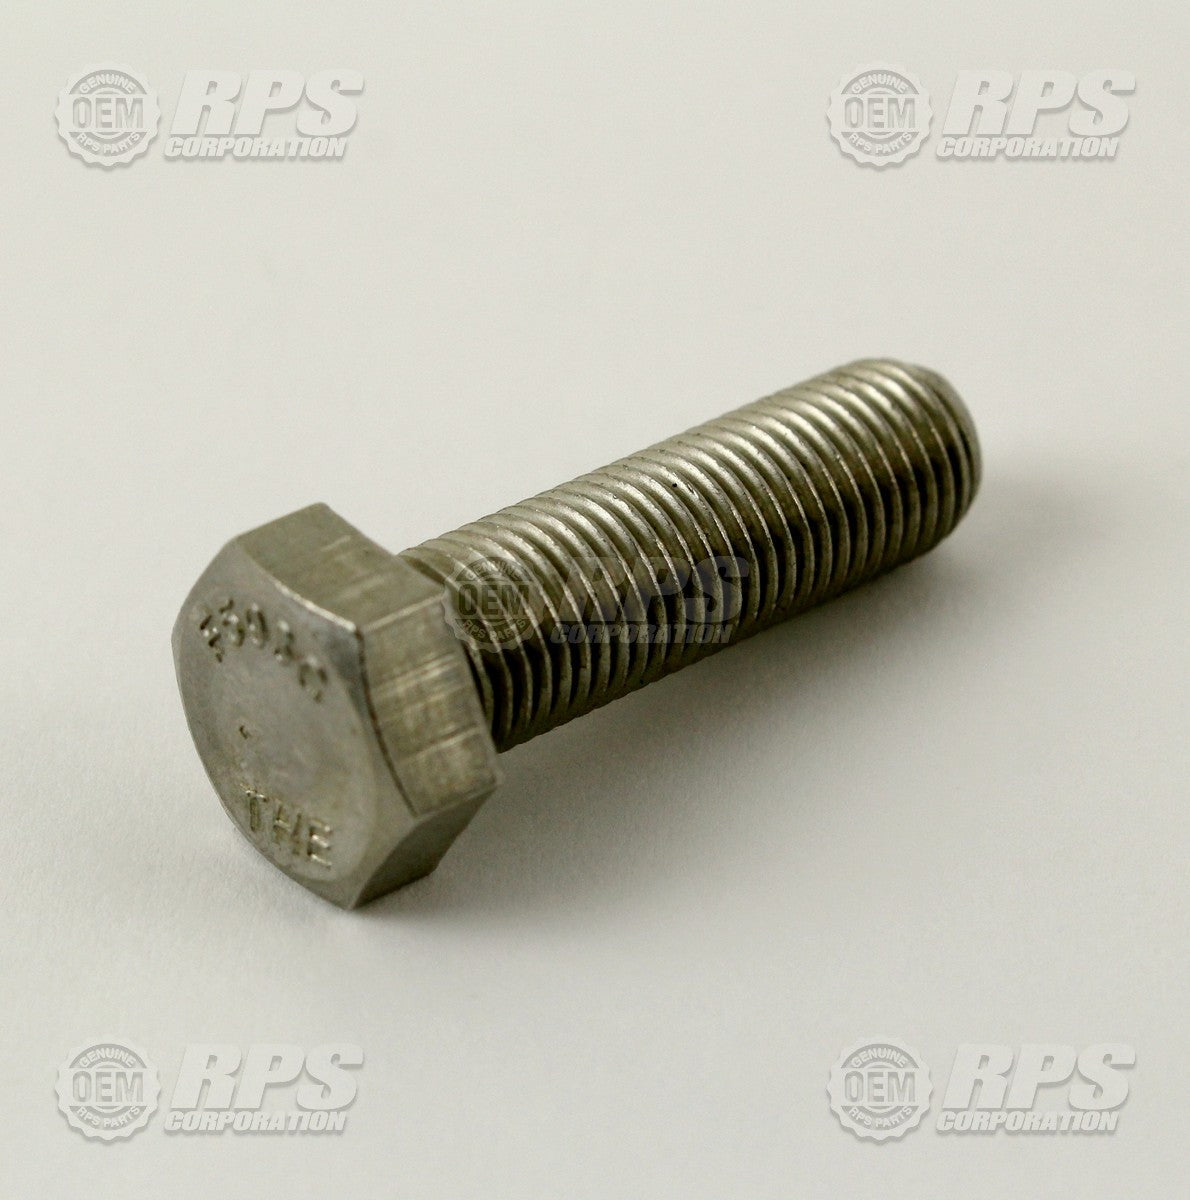 FactoryCat/Tomcat H-70143, Screw,Hex Cap,3/8-24x1-1/4" Stainless